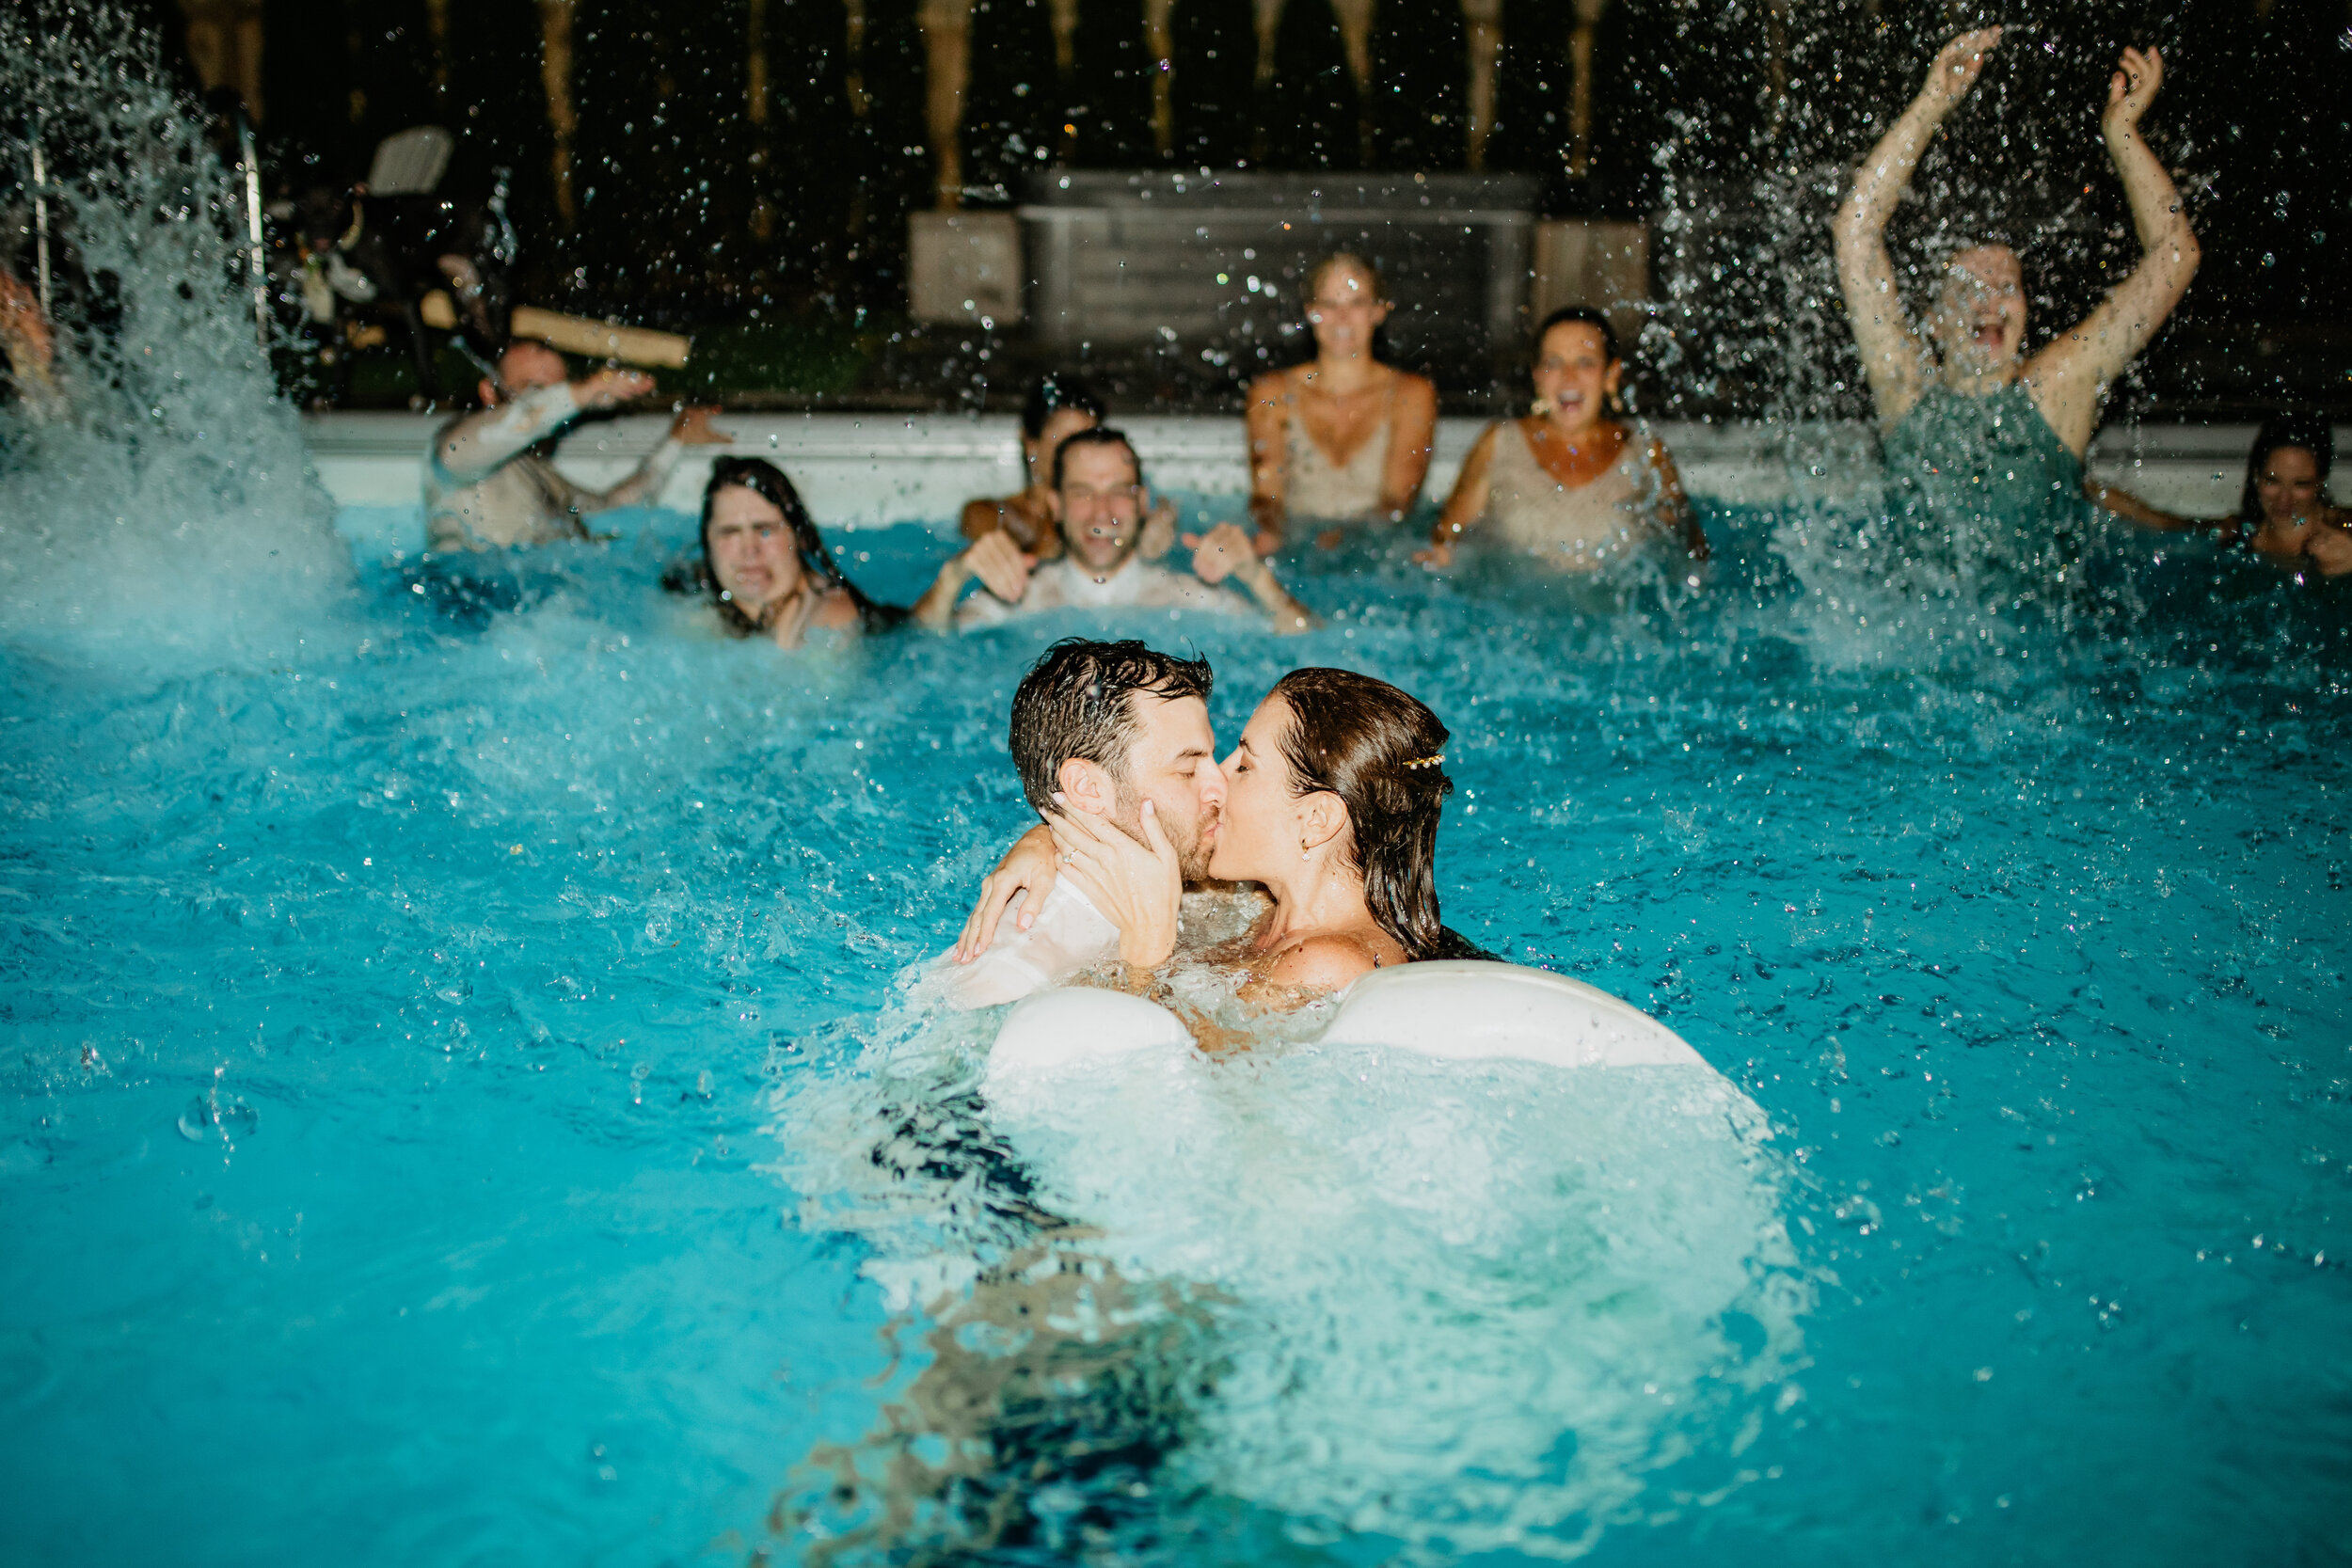 Backyard Wedding Idea - jumping into a pool!